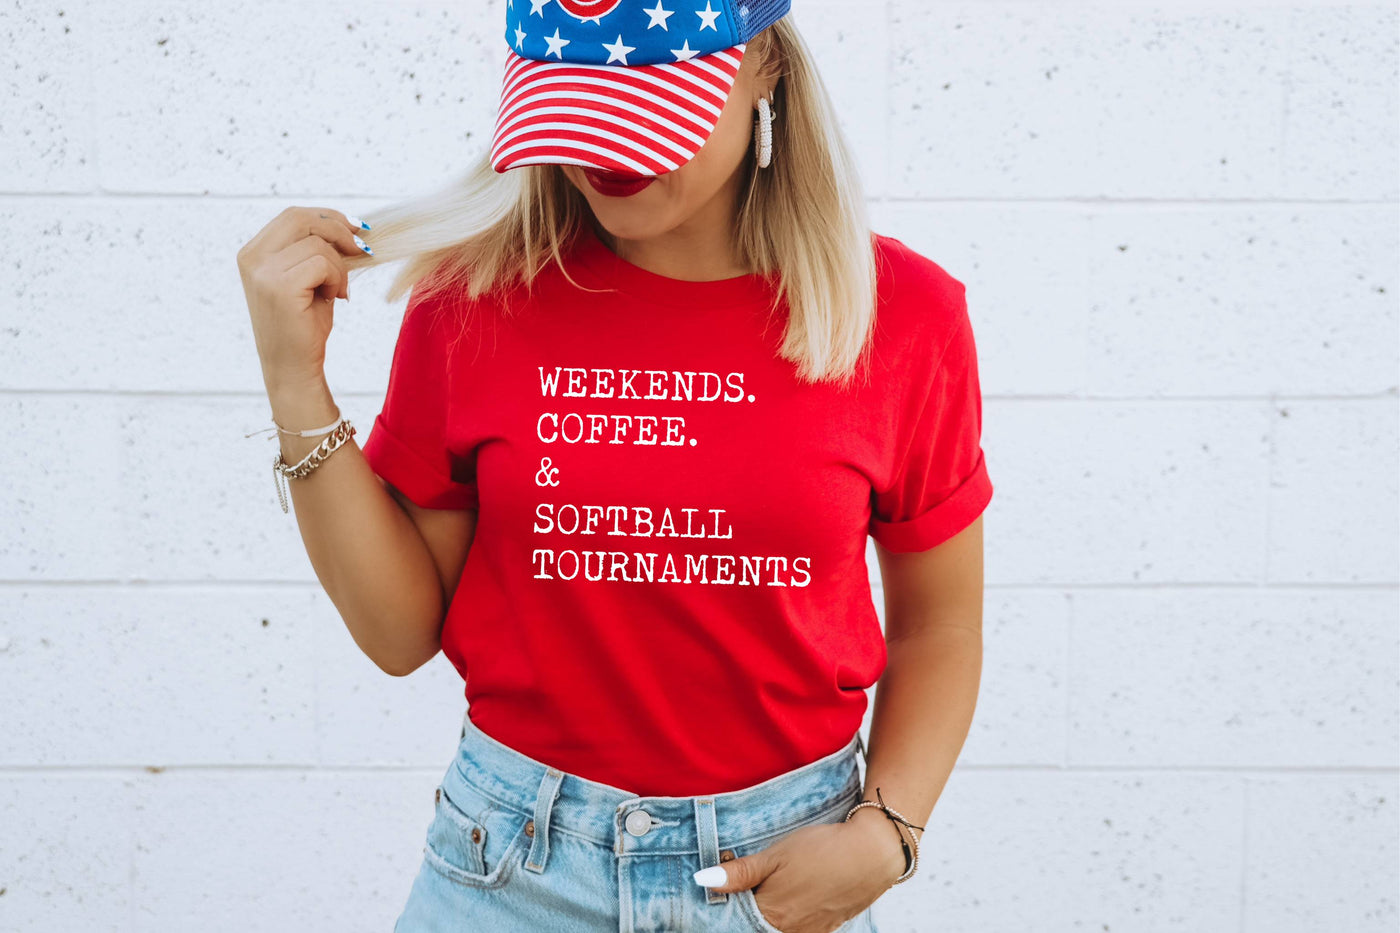 Coffee Weekends Softball Tournaments - RTS 2/2